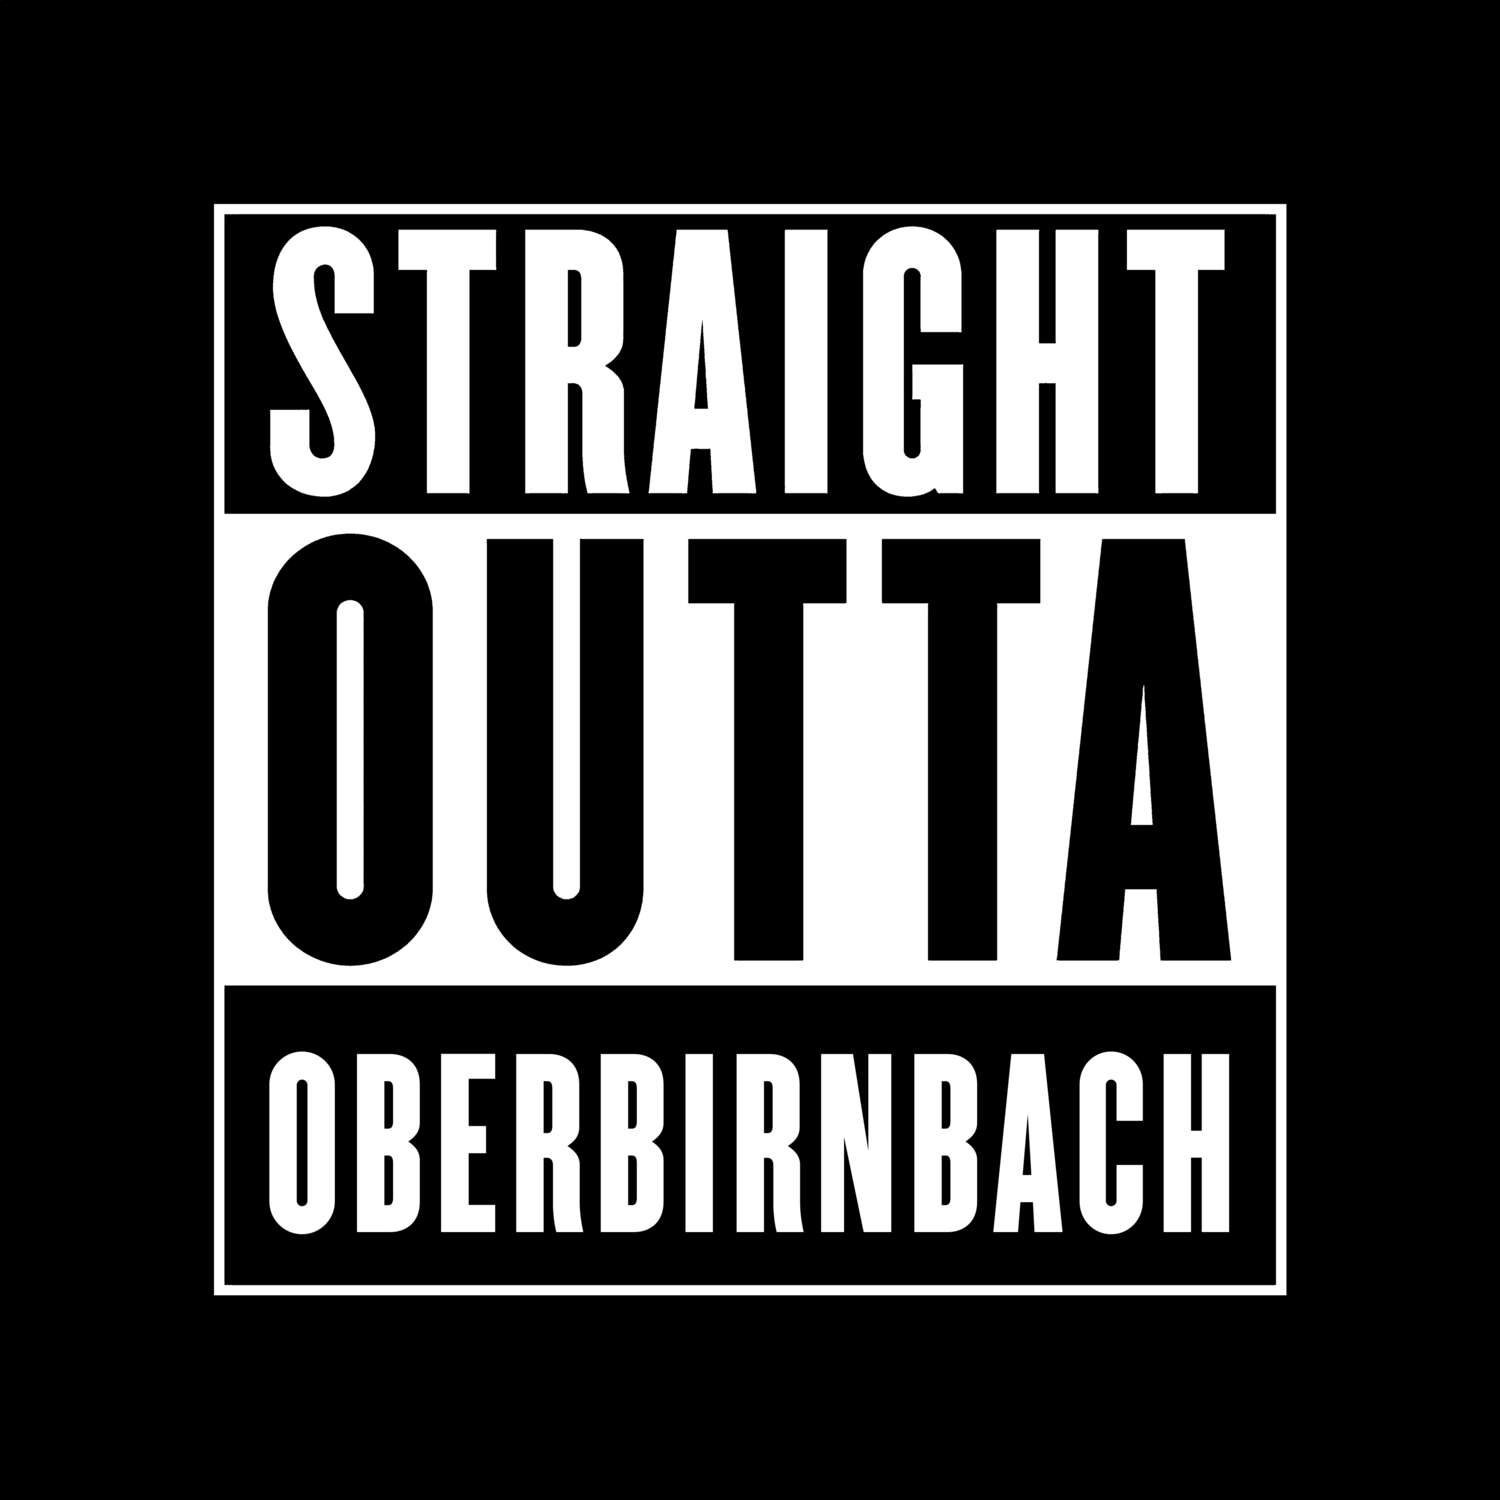 Oberbirnbach T-Shirt »Straight Outta«